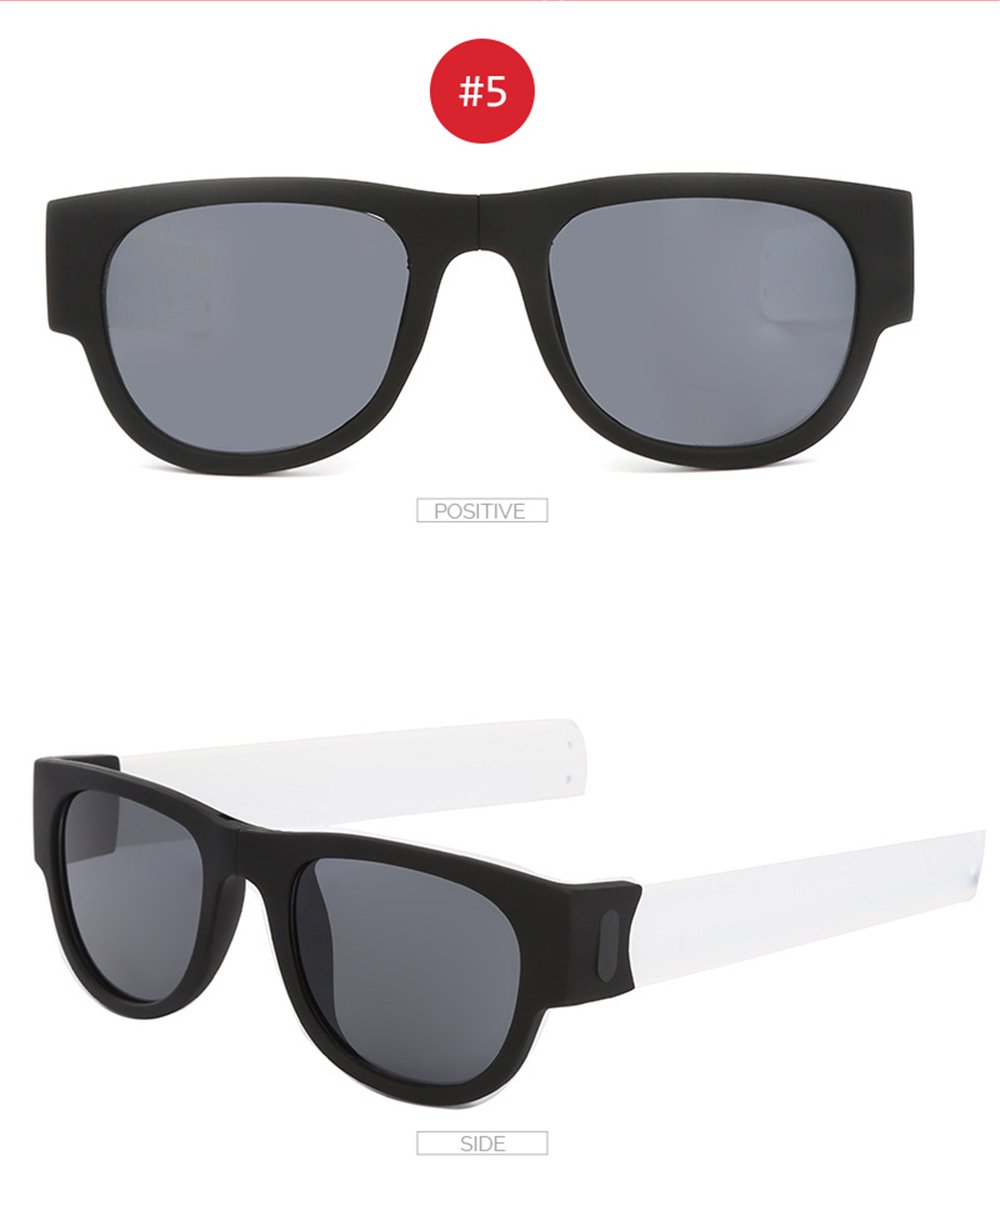 Fancy Slap Wristband Sunglasses Folding Bracelet - Slap Sunglasses Find Epic Store